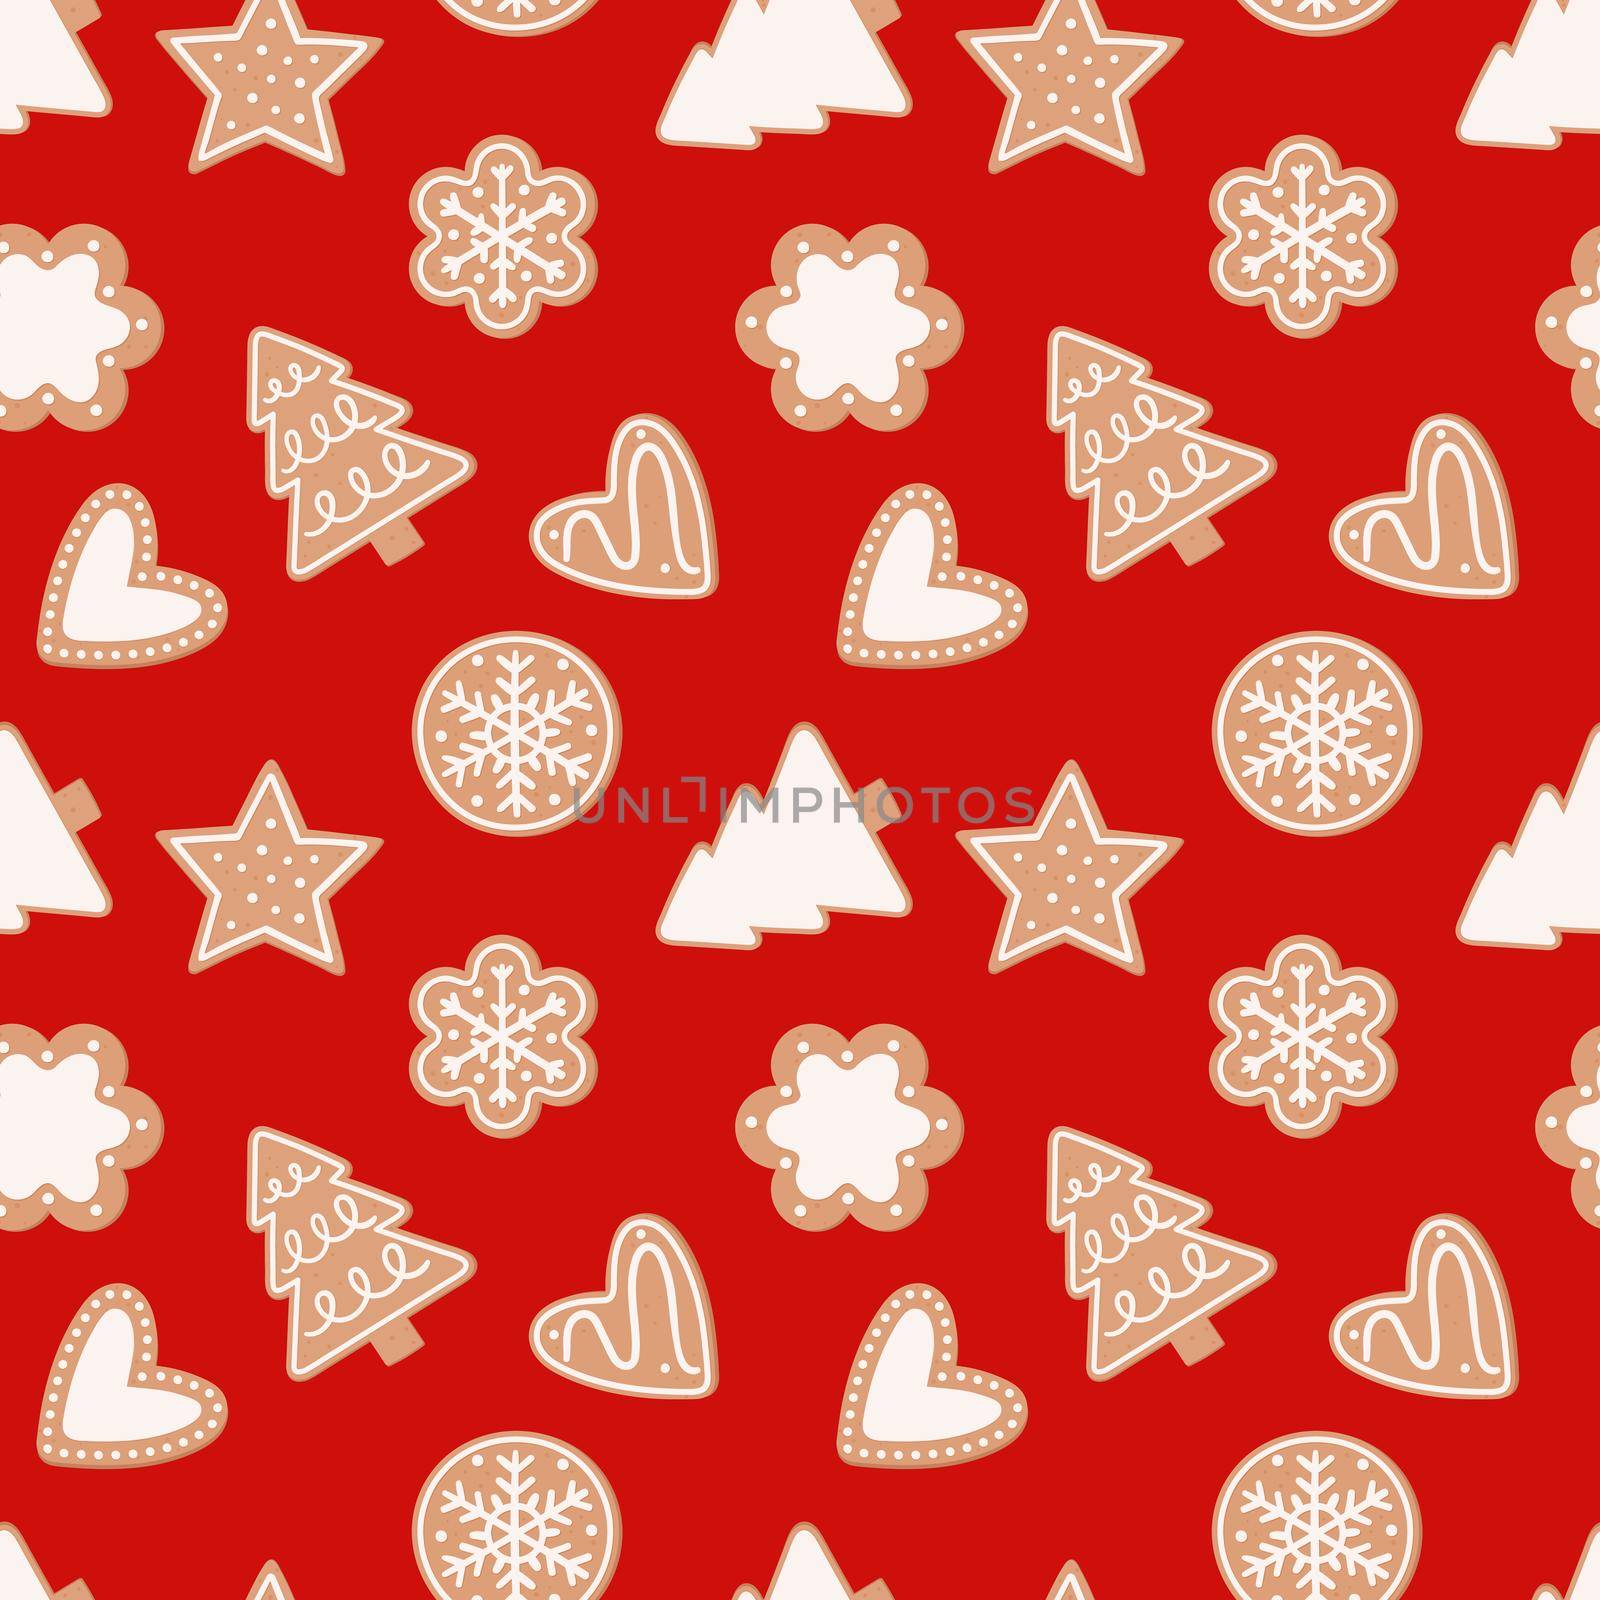 Gingerbread festive seamless pattern. Vector illustration in flat cartoon style